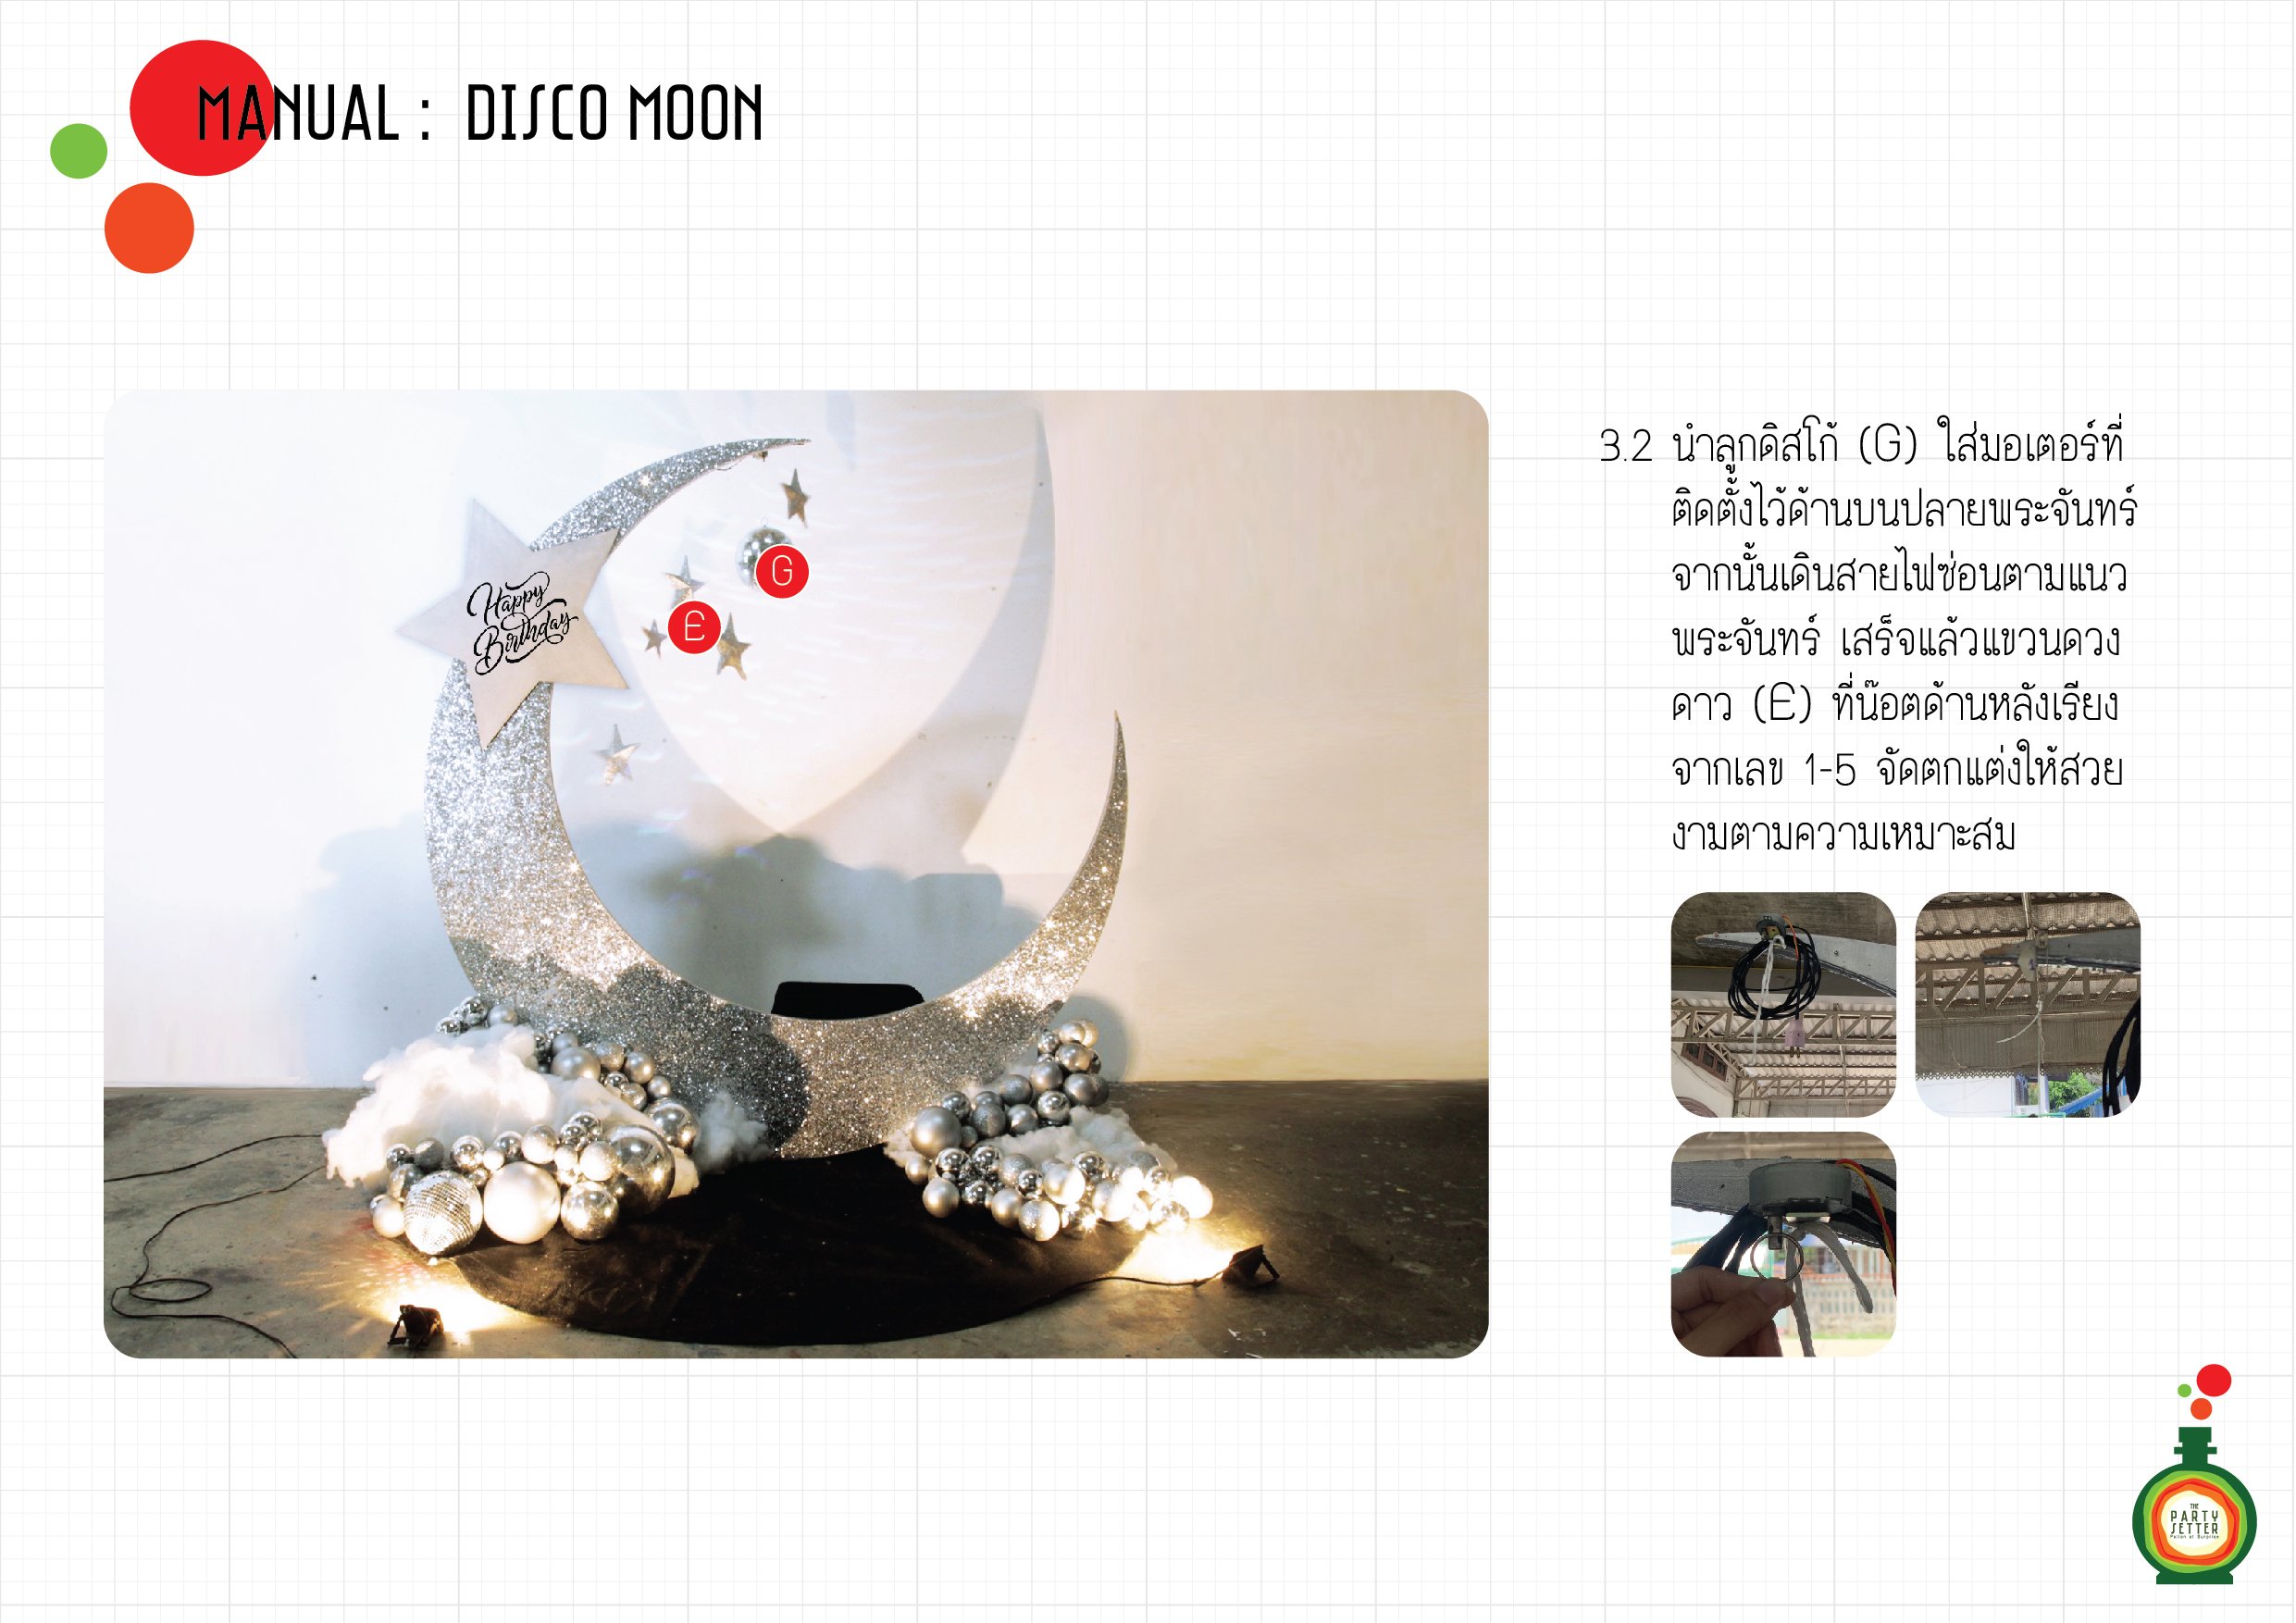 Manual_Disco Moon-03.2-01.jpg